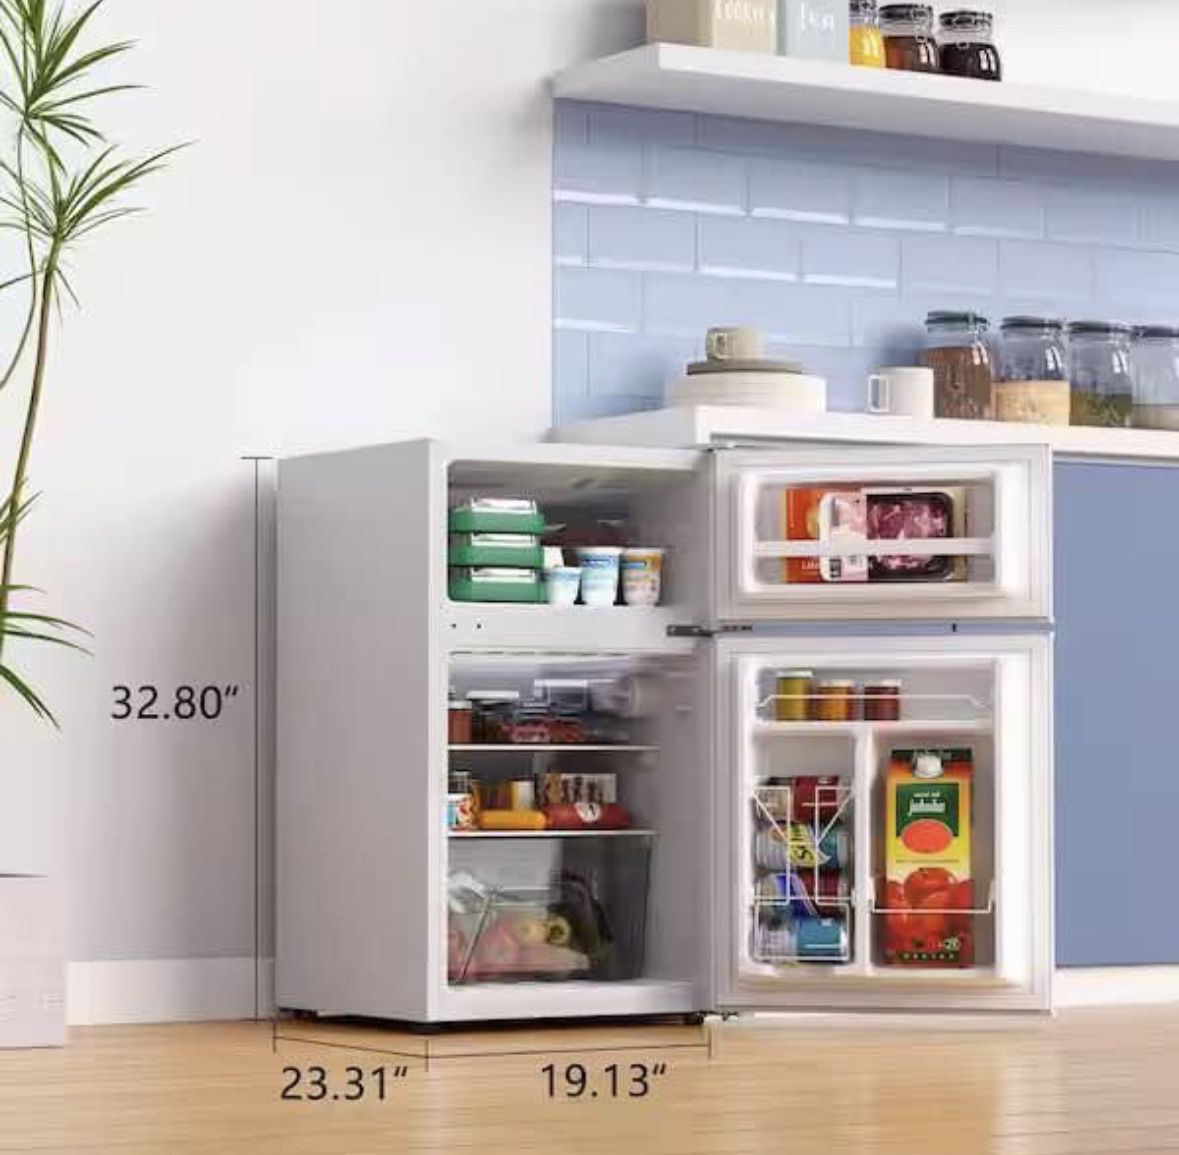 3.1 cu. ft. Mini Refrigerator with Freezer NEW IN BOX